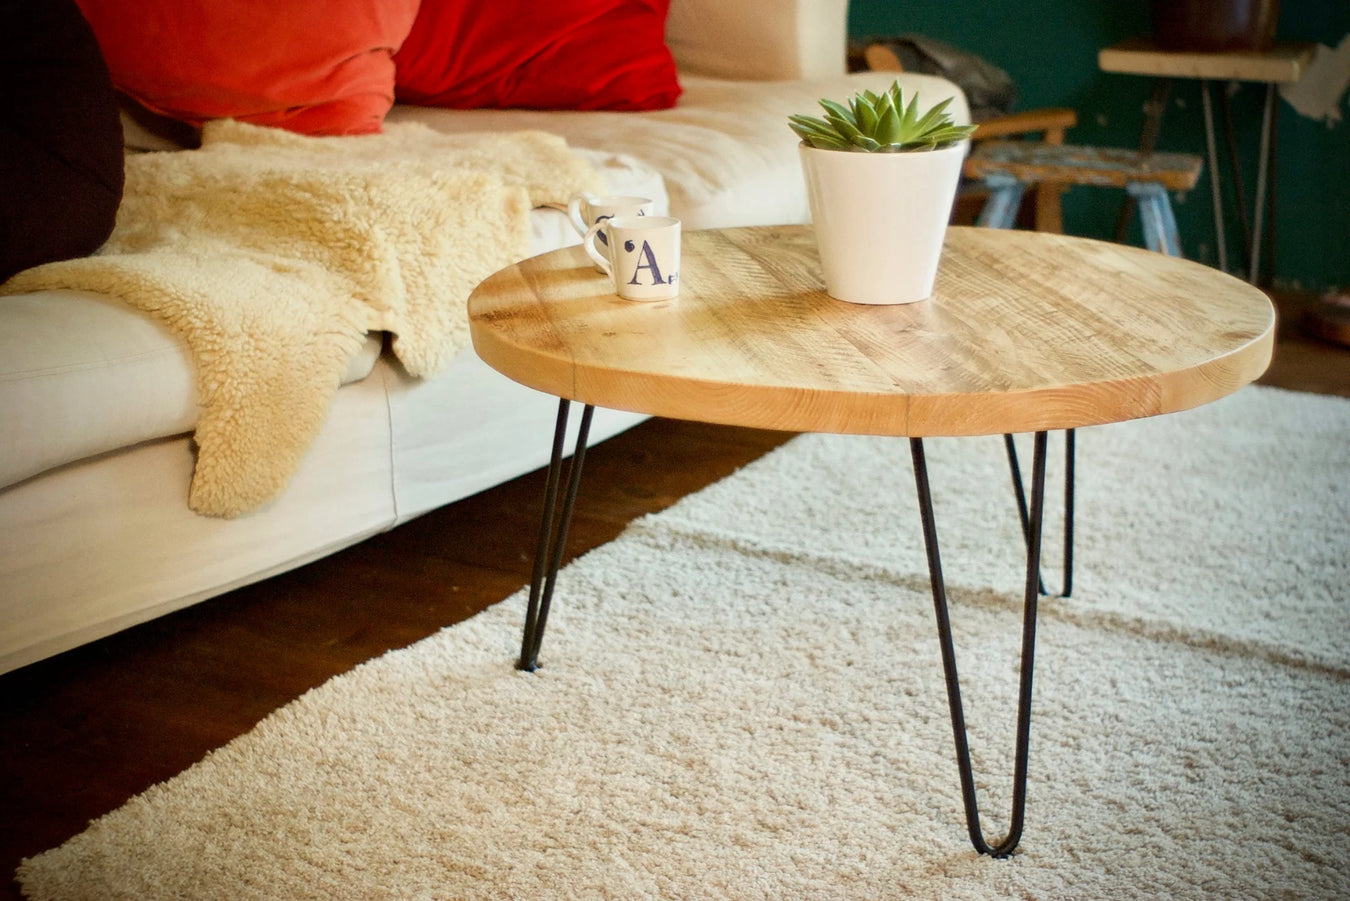 Handmade bespoke coffee tables: functional and beautiful living room furniture